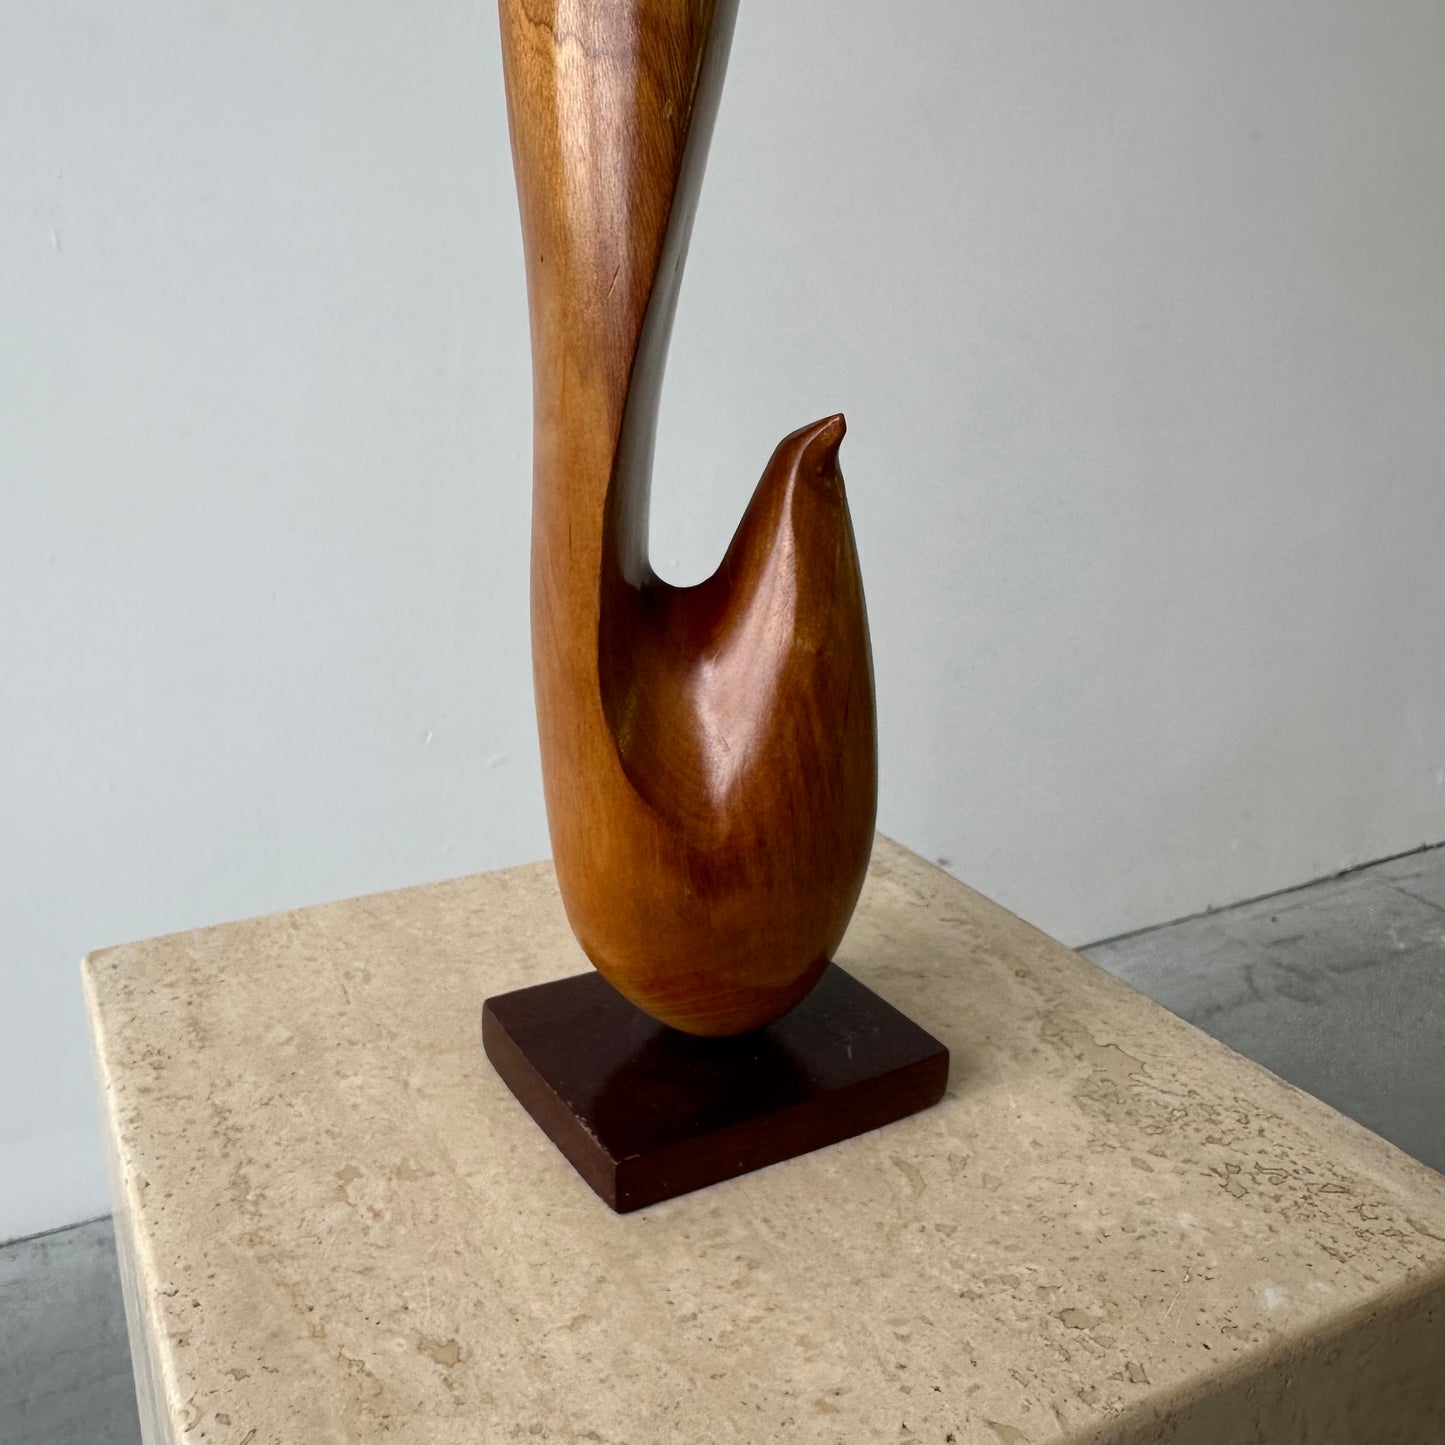 Carved Phallic Sculpture